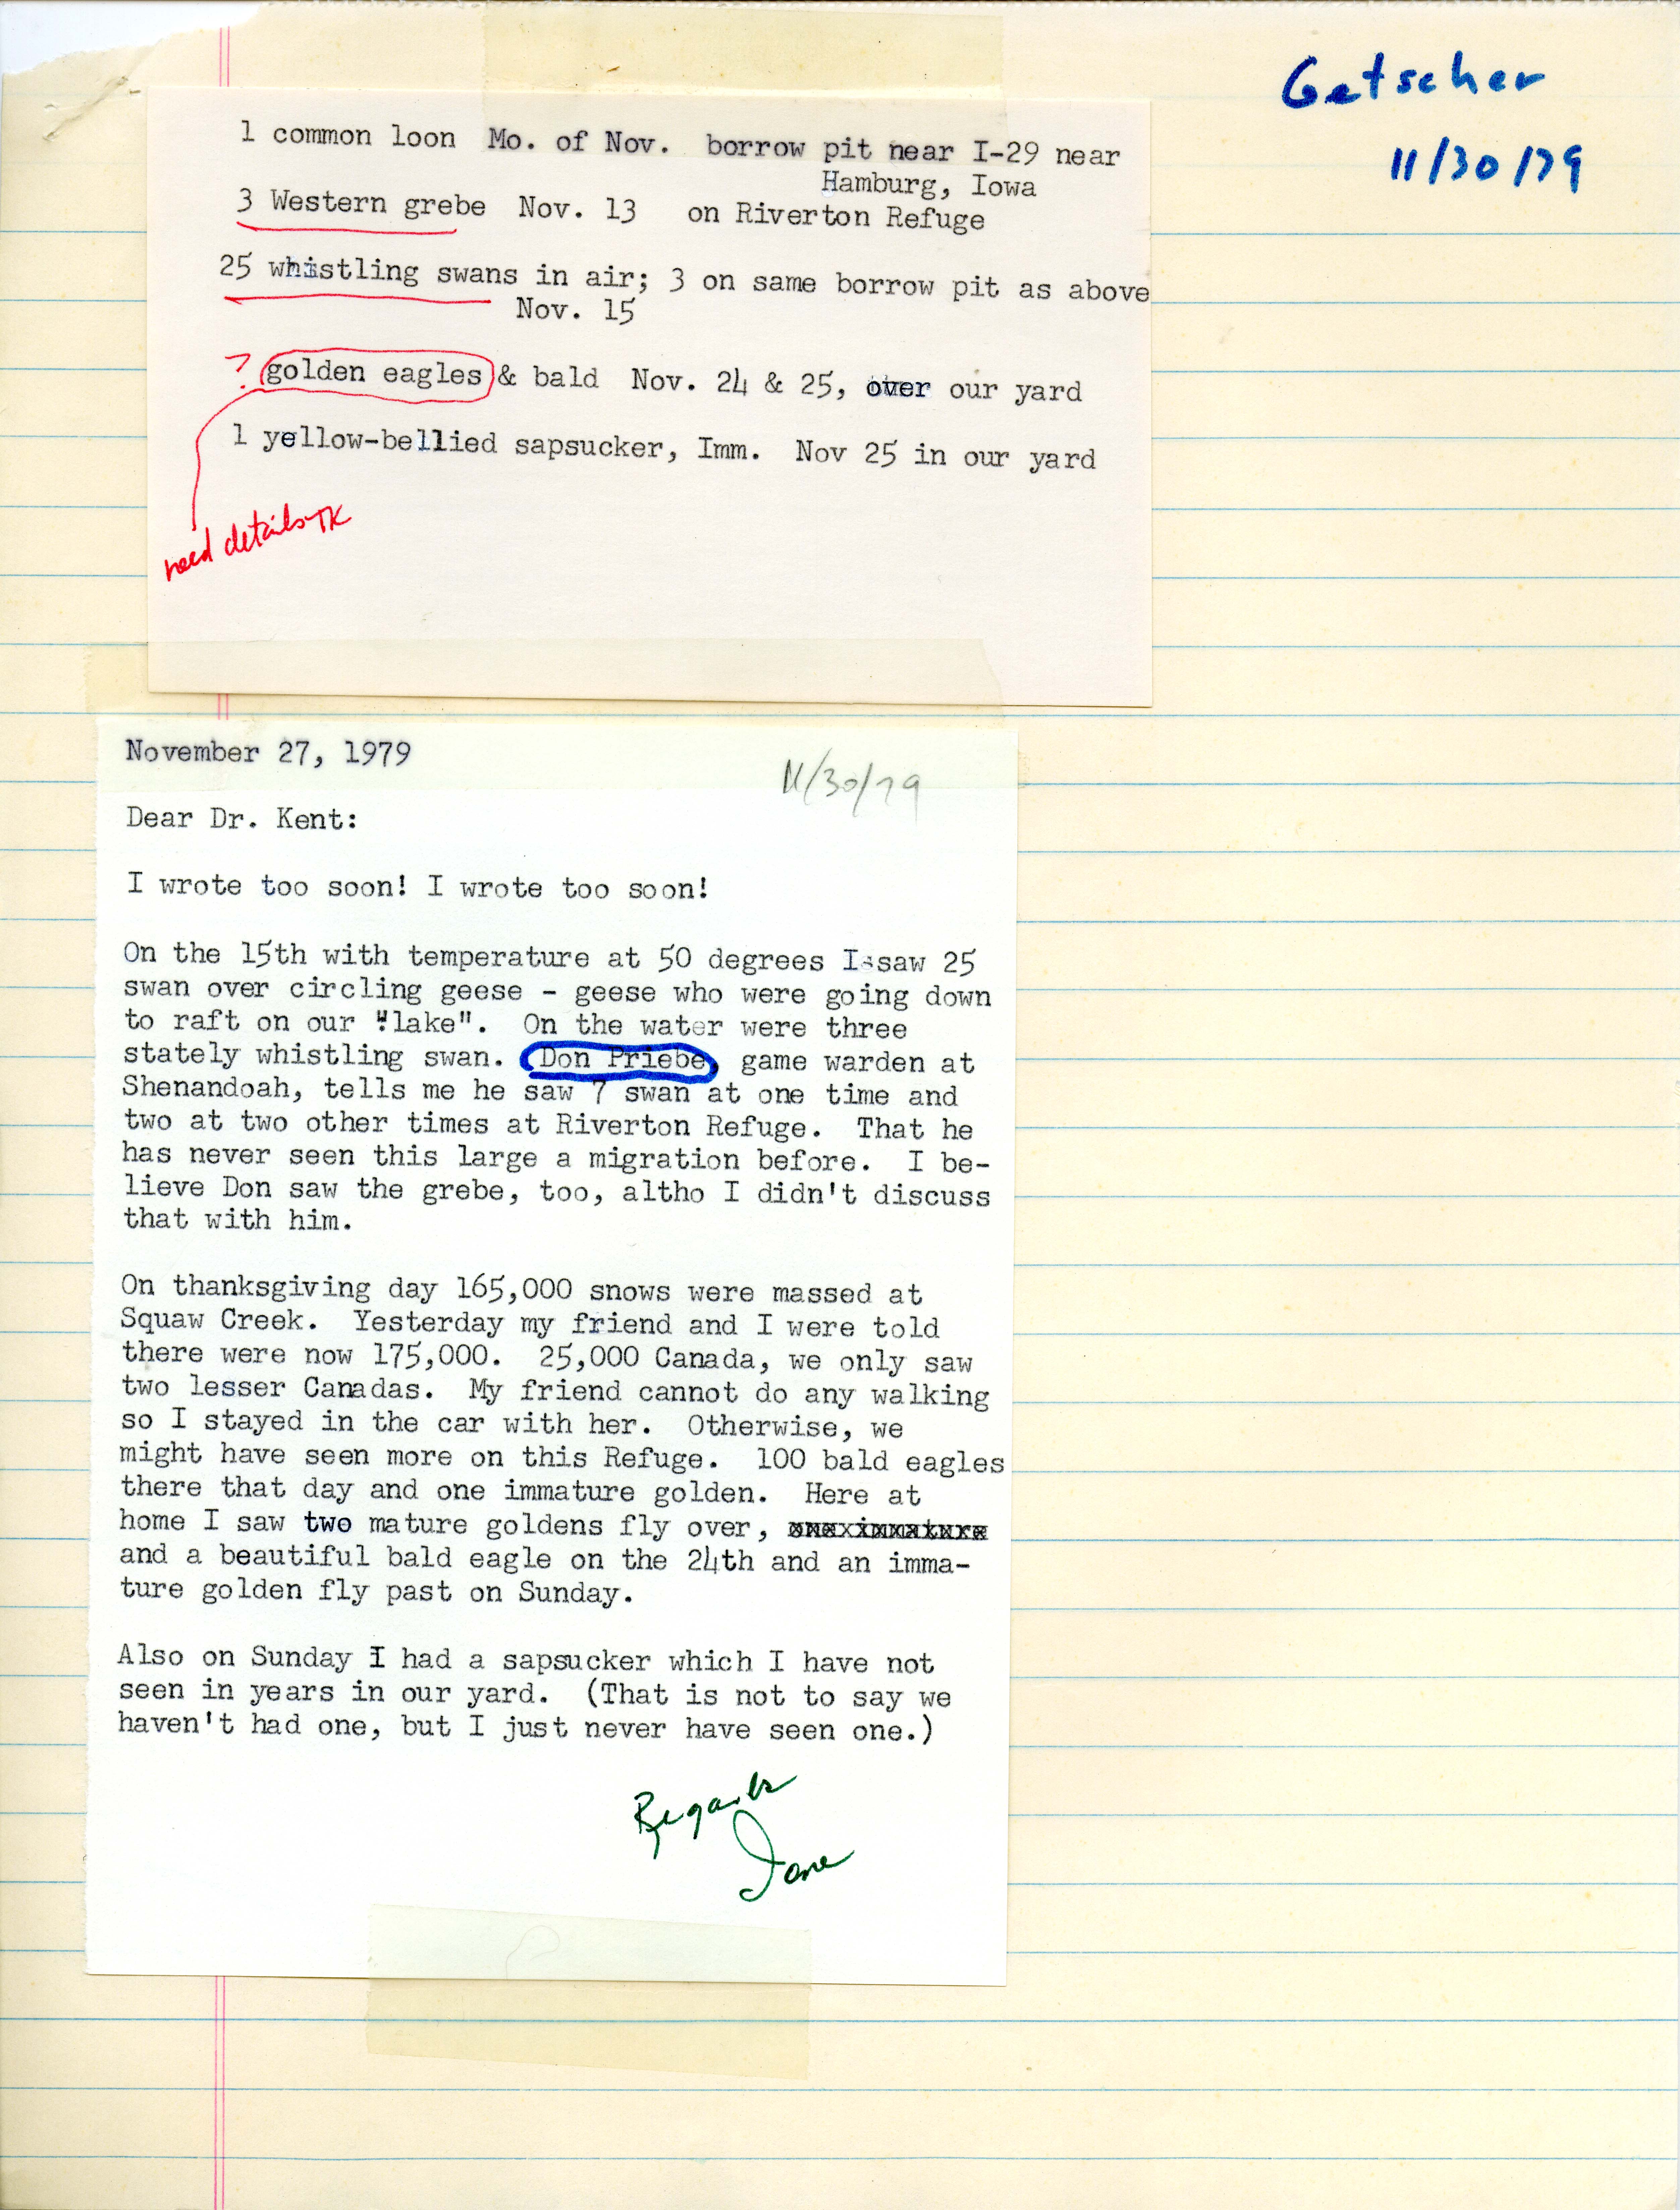 Ione Getscher letter to Thomas H. Kent regarding bird sightings, November 27, 1979